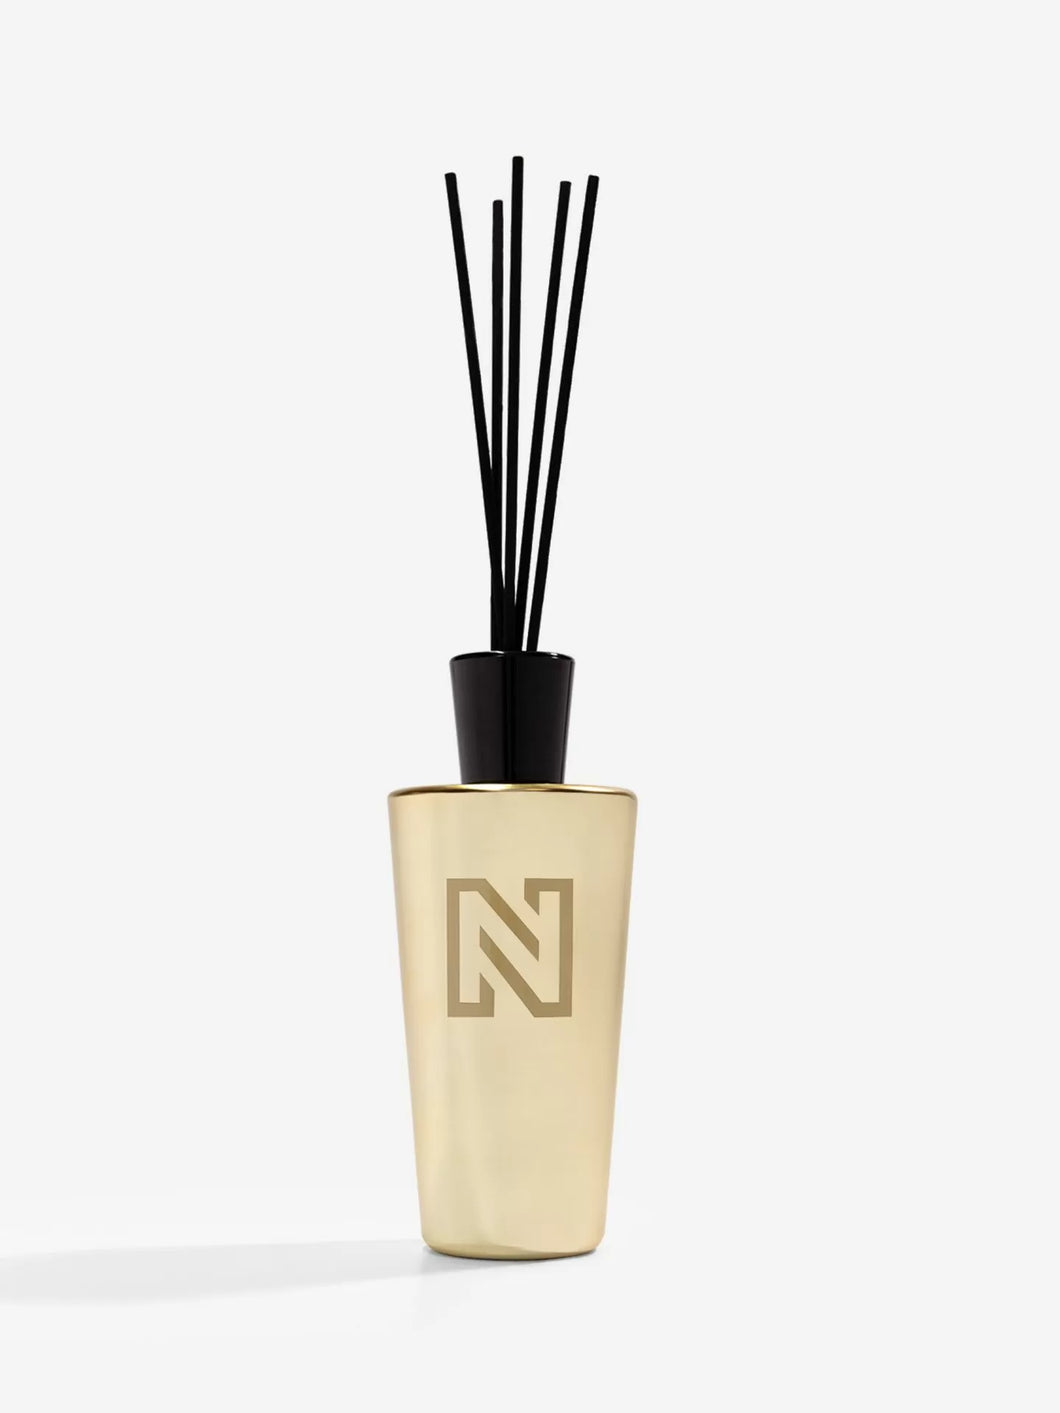 NHome Fragrance Sticks Max Golden Alps H 2-021 0000 1004 Gold